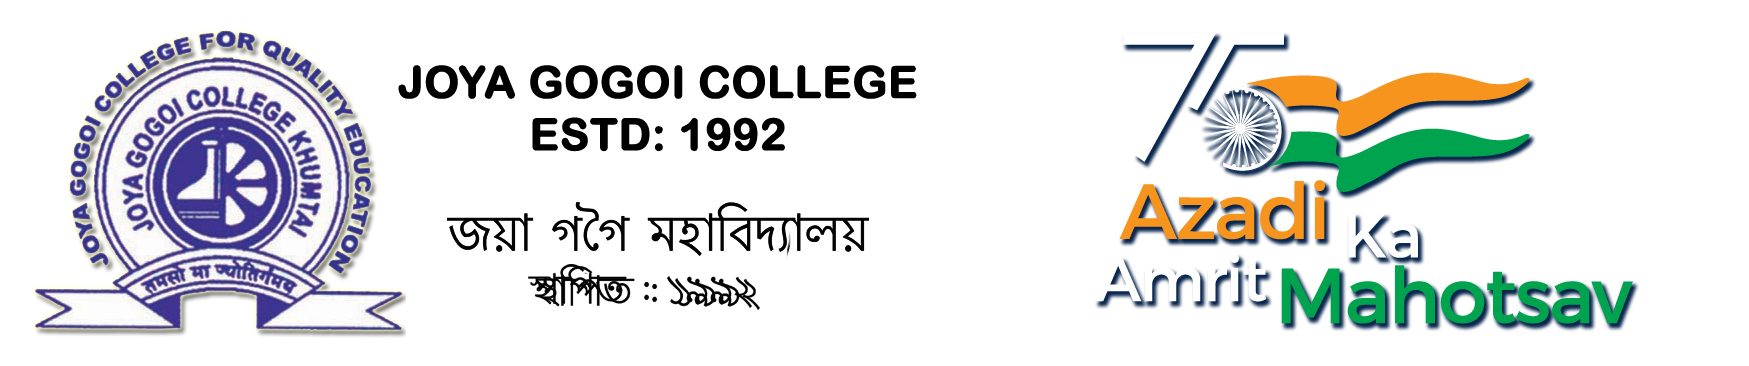 Joya Gogoi College